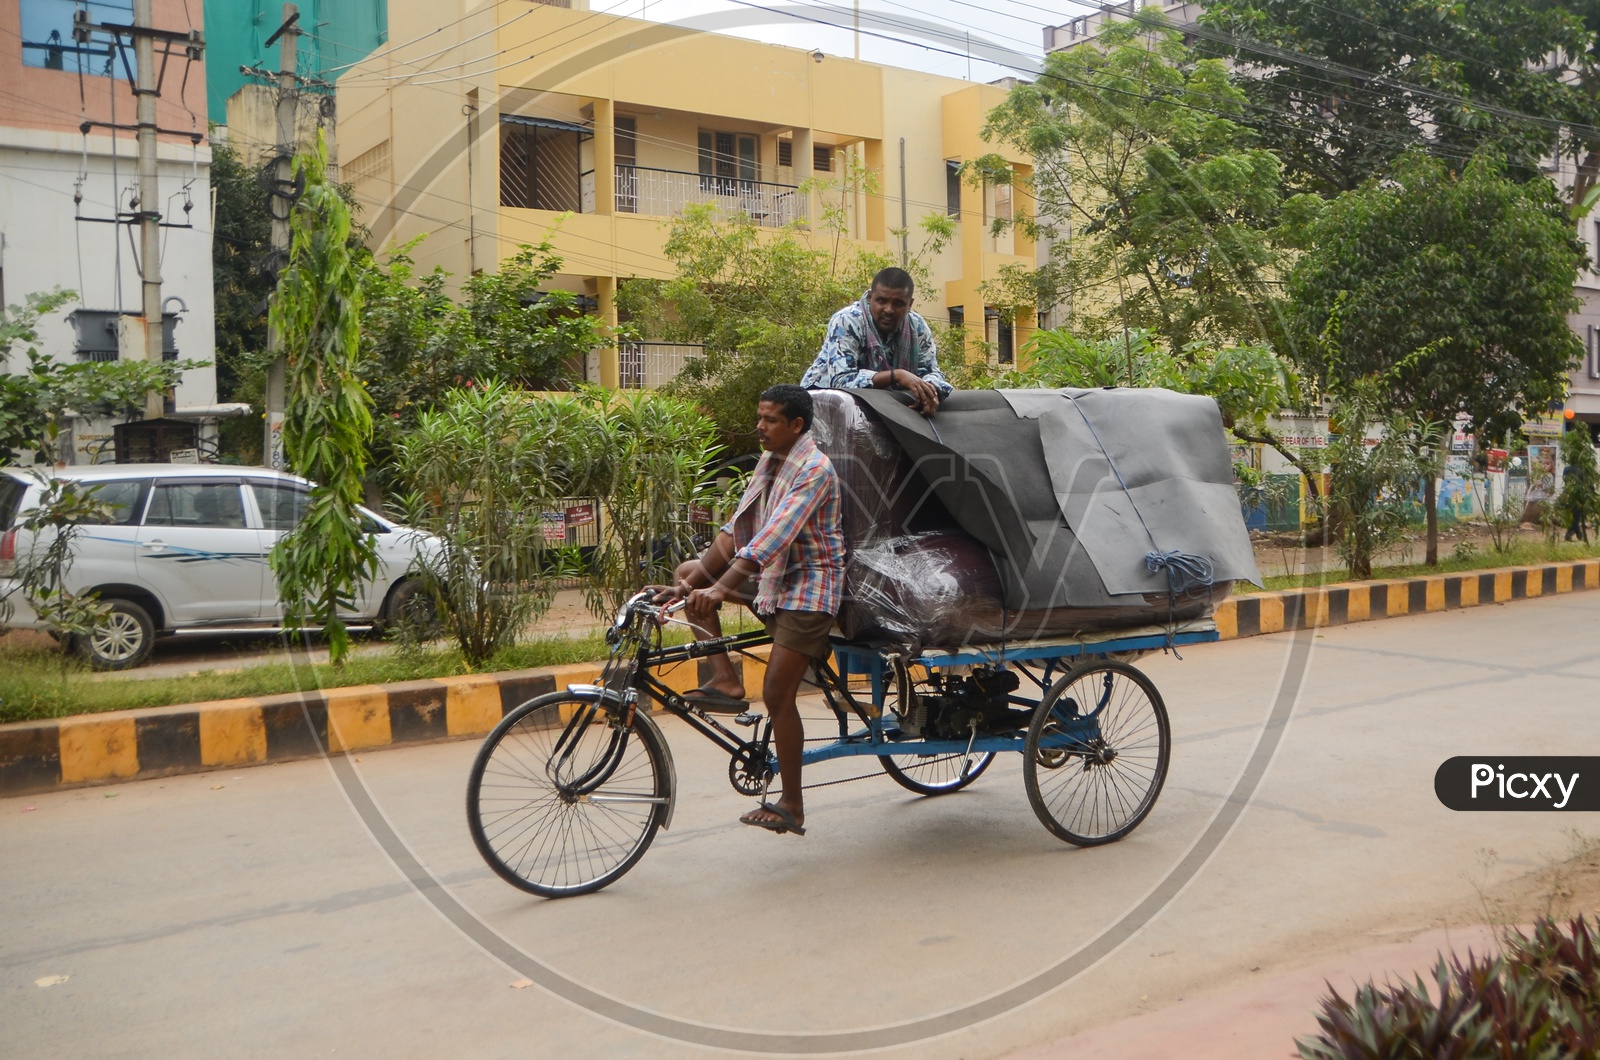 Daily labourers, transportation